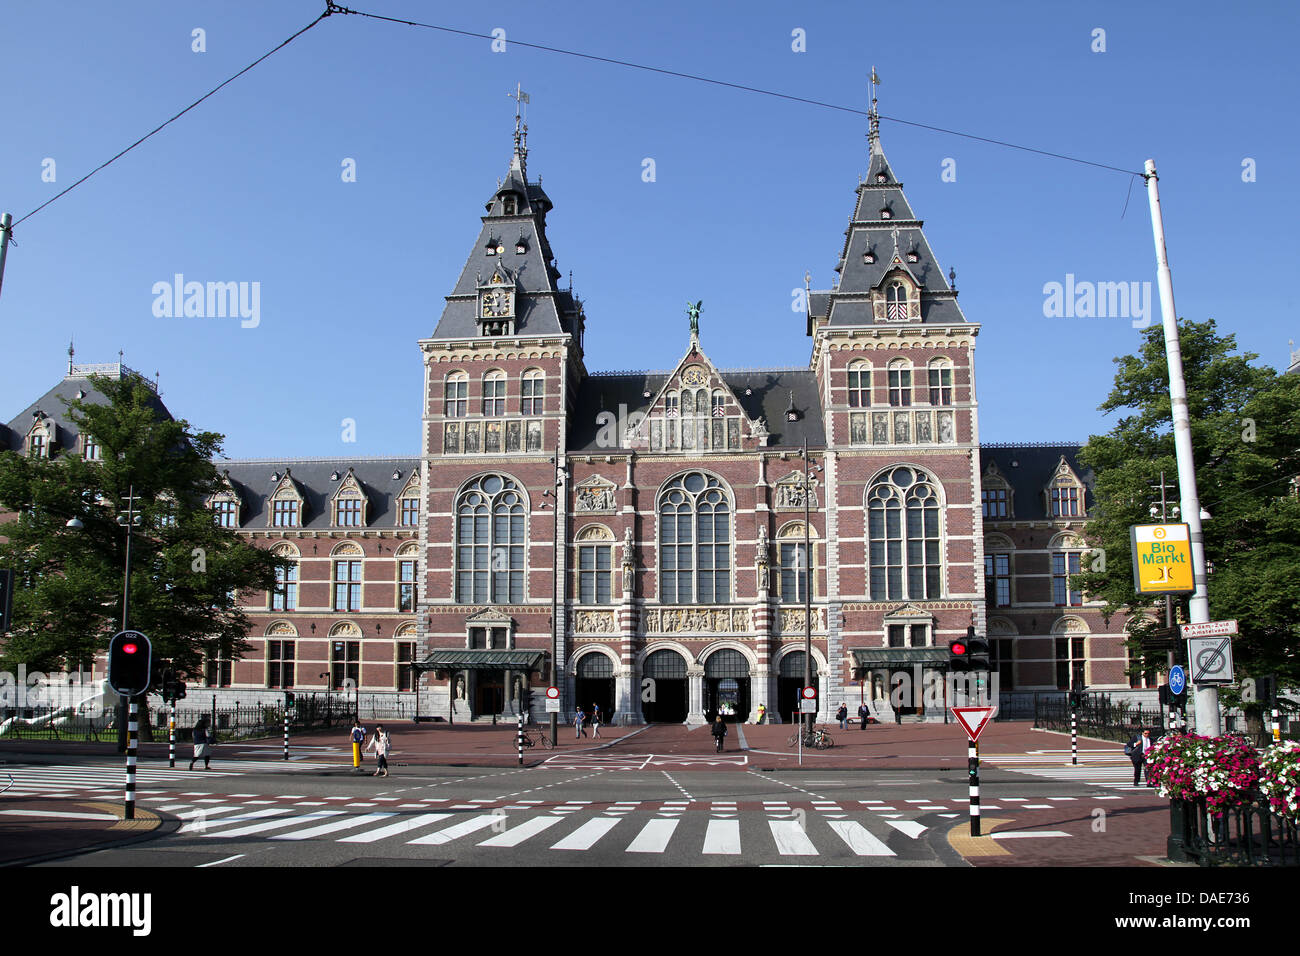 Rijksmuseum Amsterdam dell'architetto olandese Pierre Cuypers Weteringschans.Amsterdam, Paesi Bassi, Nord Olanda.Rembrandt.van Gogh.Vermeer. Foto Stock